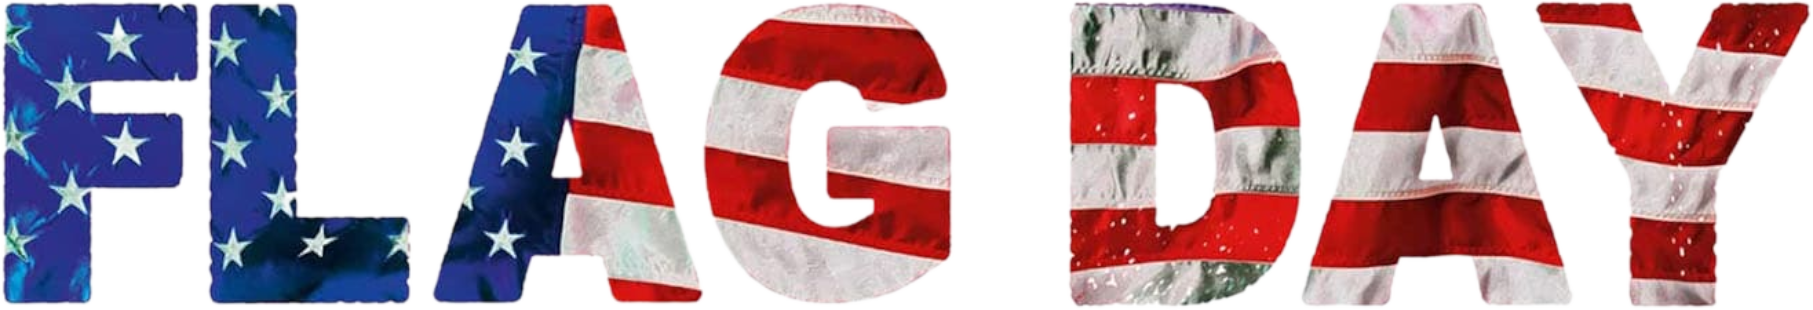 Some logo